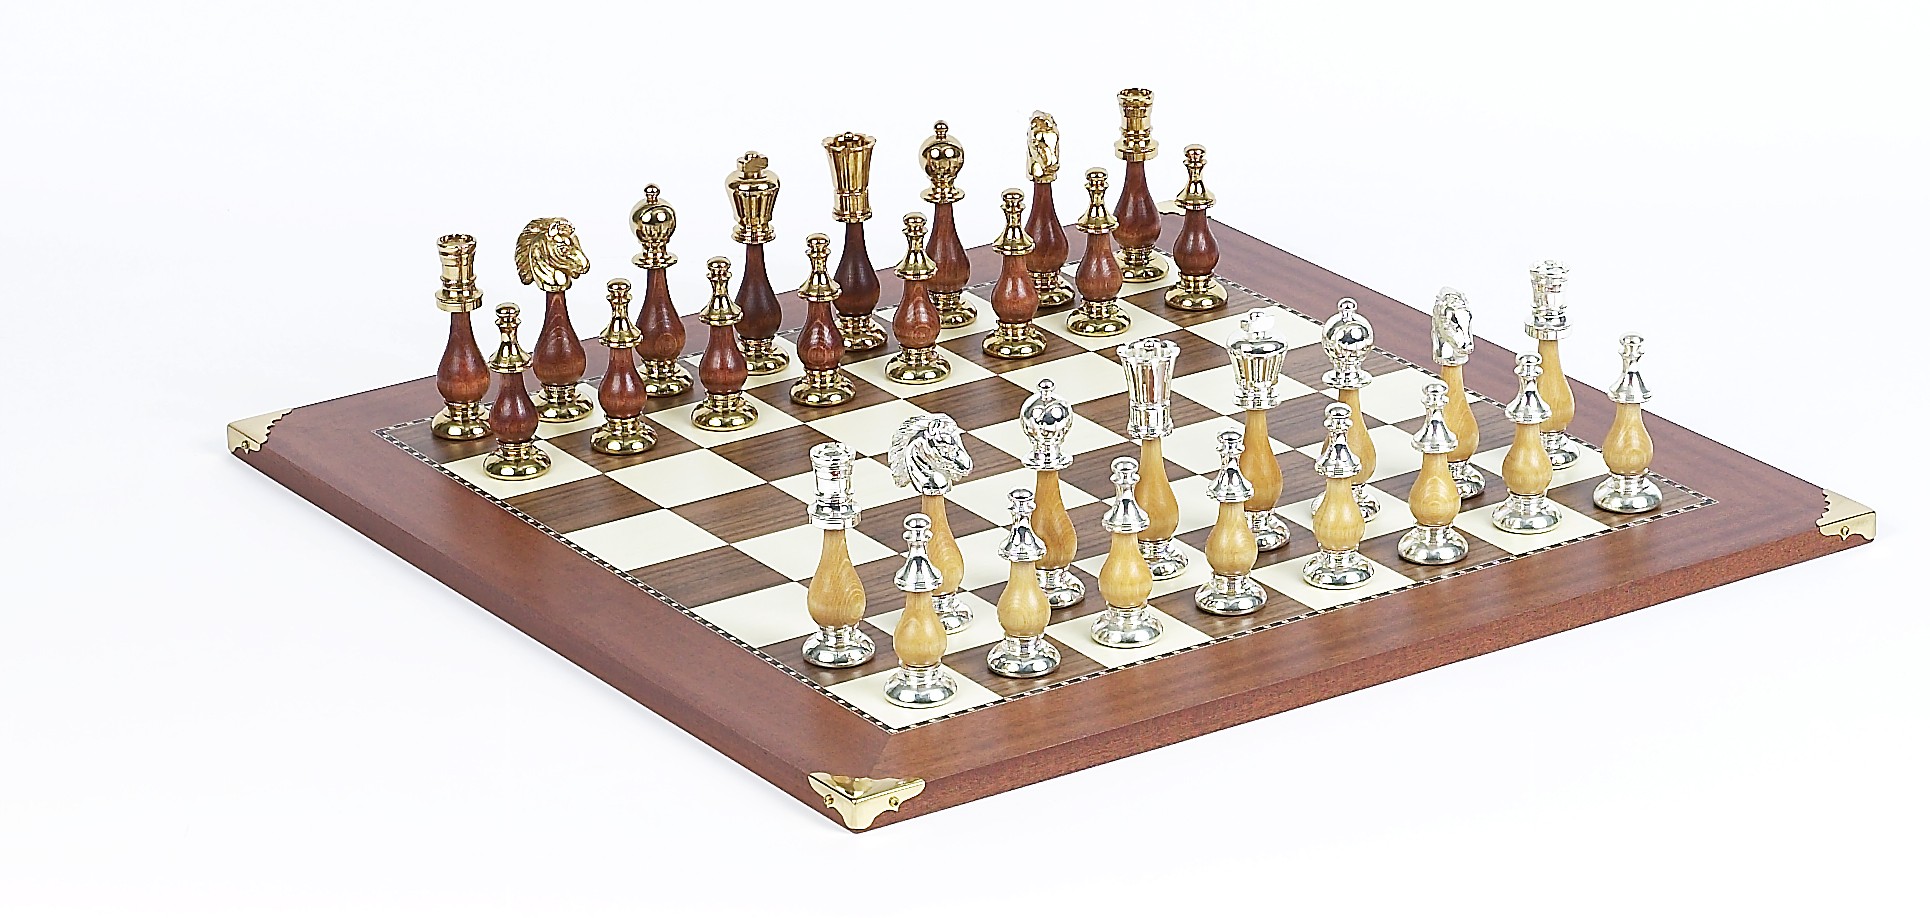 The Gold Chessmen & Champion Board